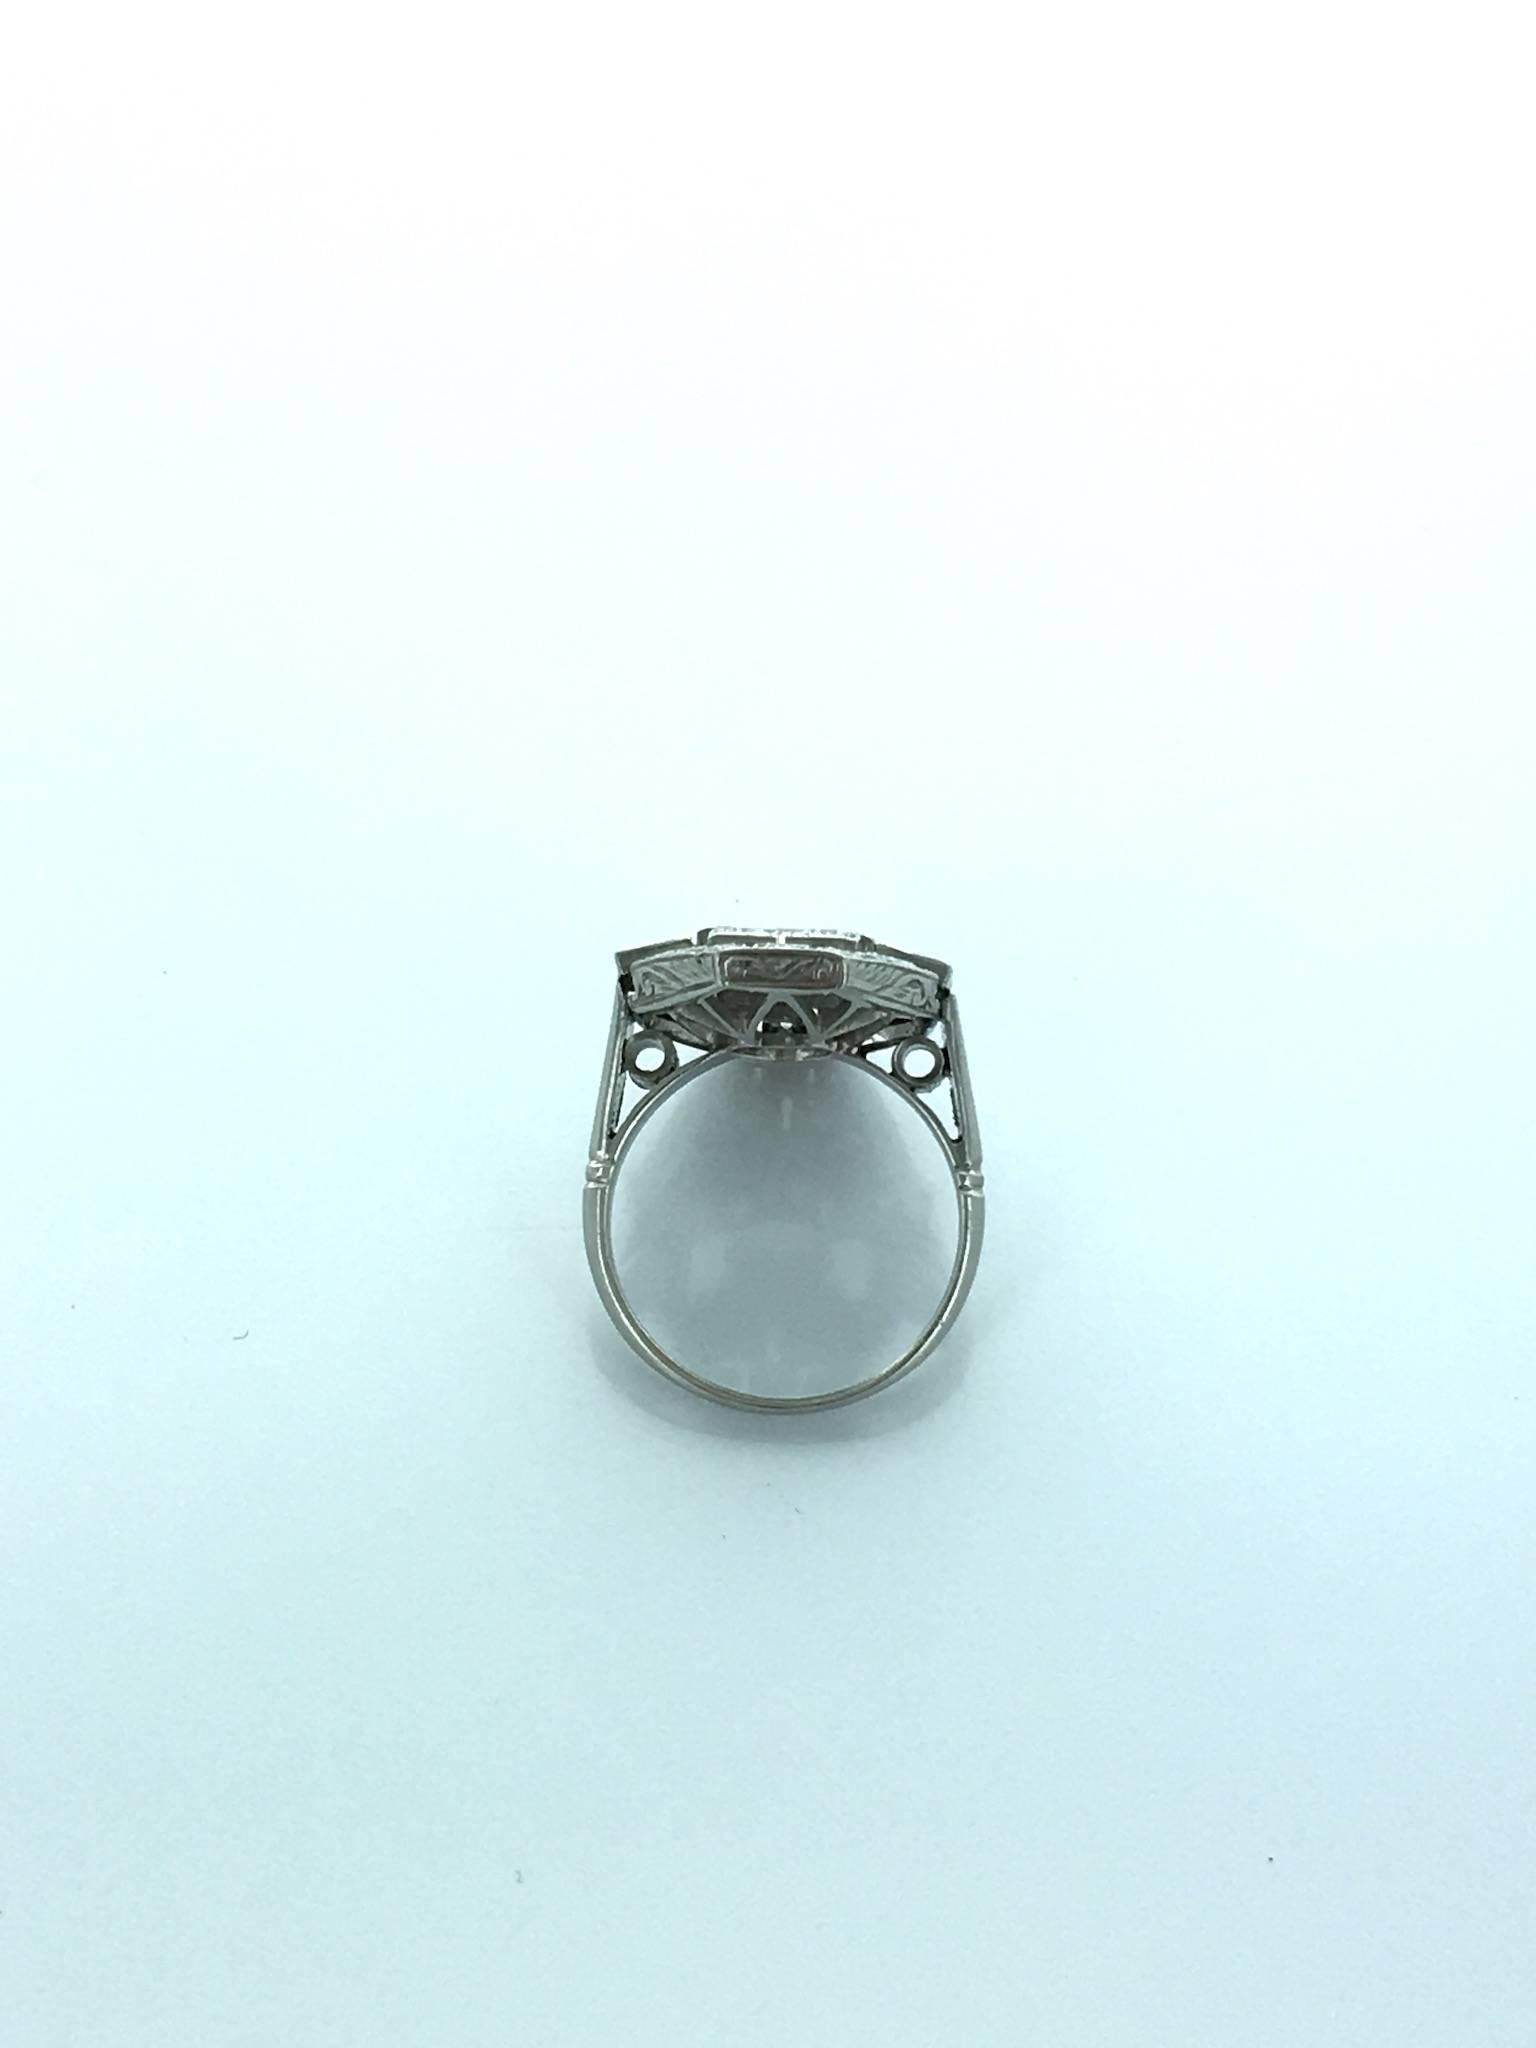 Women's Art Deco Diamond Platinum Ring